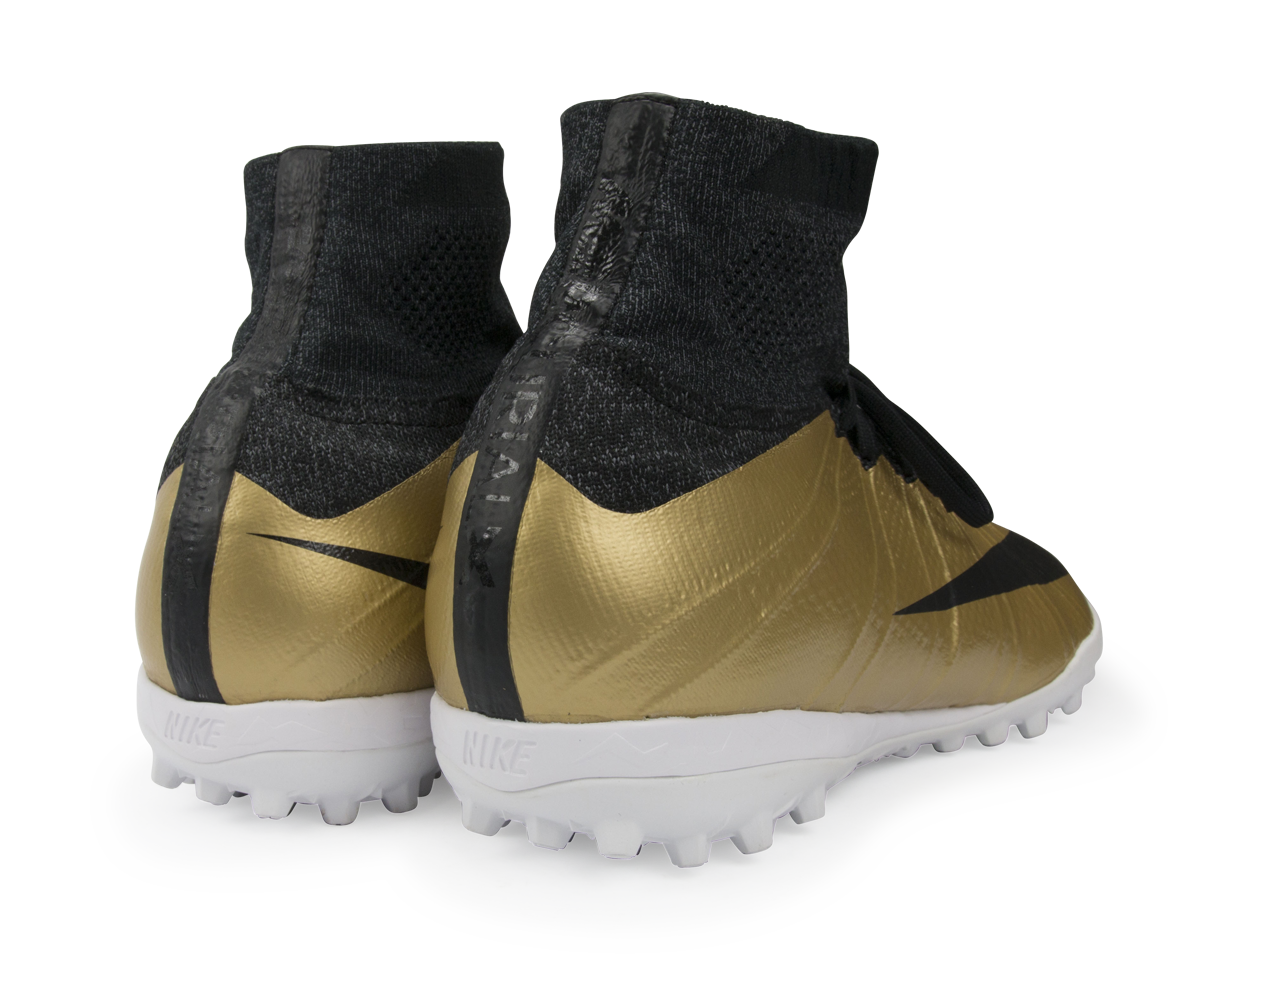 Nike Men's MercurialX Proximo Turf Soccer Shoes Metallic Gold/Black/Tour Yellow